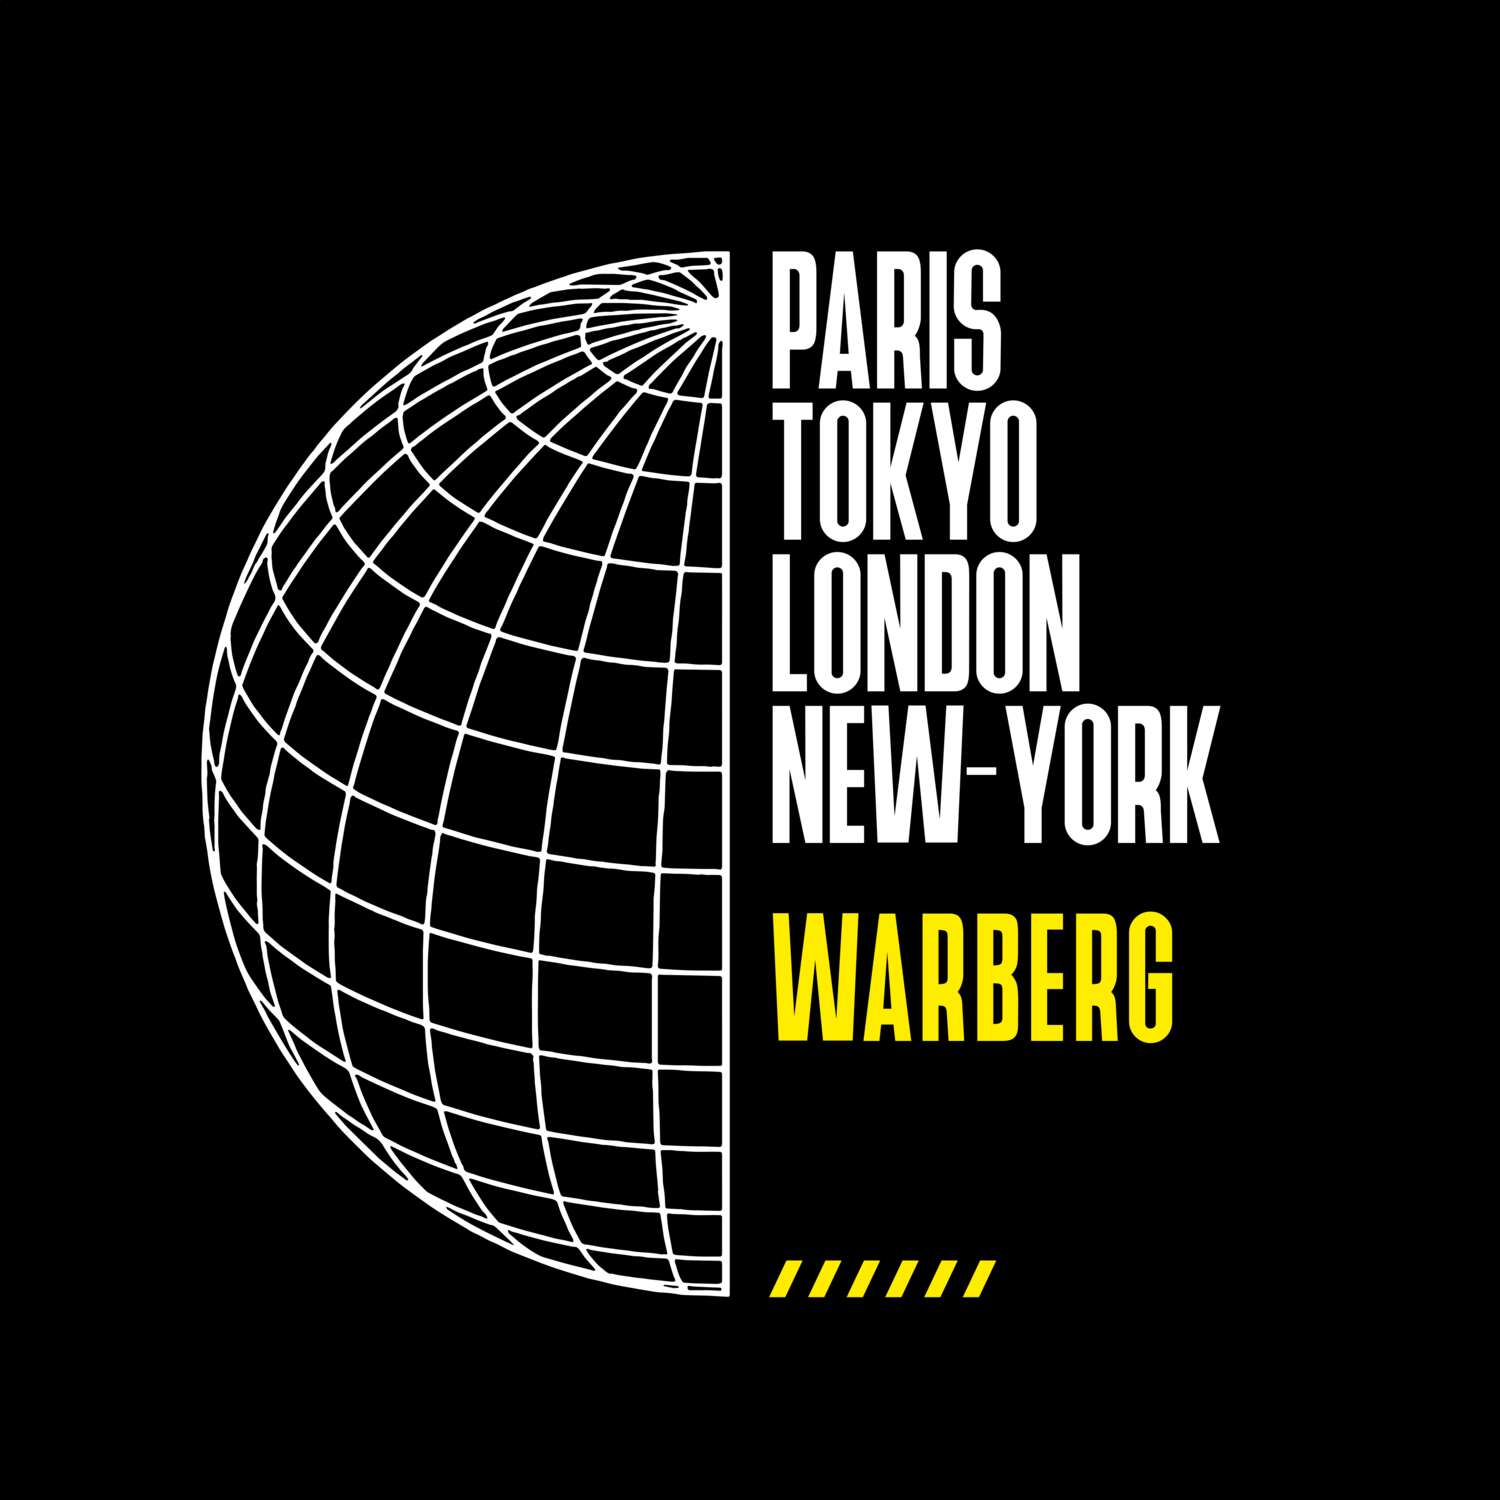 Warberg T-Shirt »Paris Tokyo London«